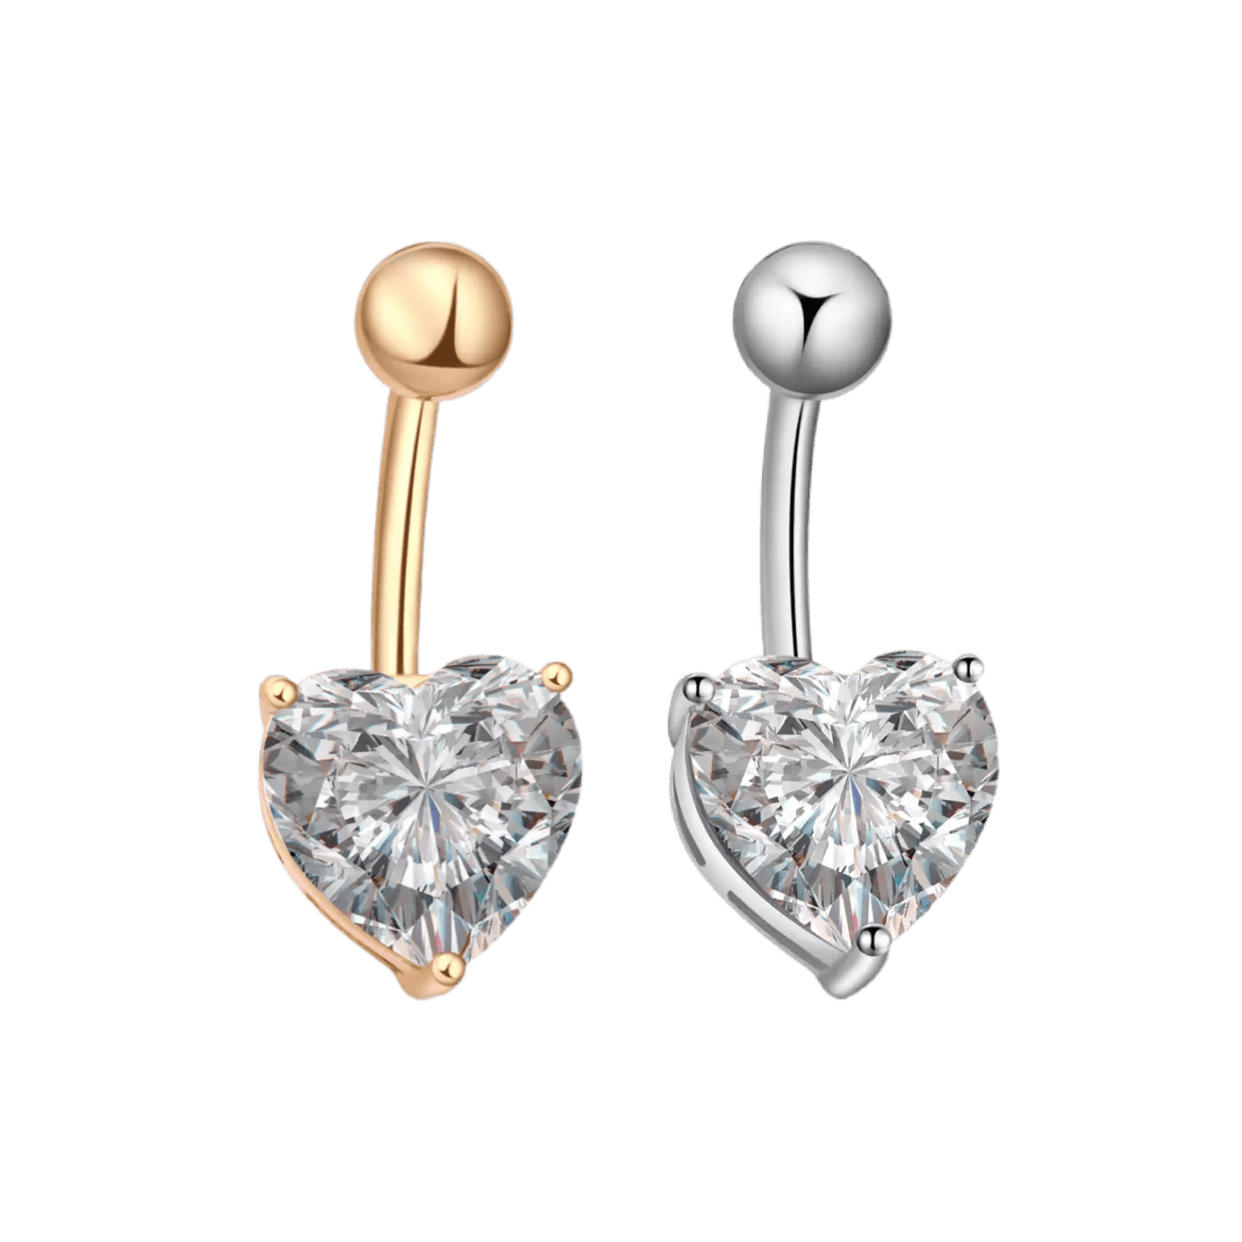 stainless steel belly piercing jewelry heart cz barbell